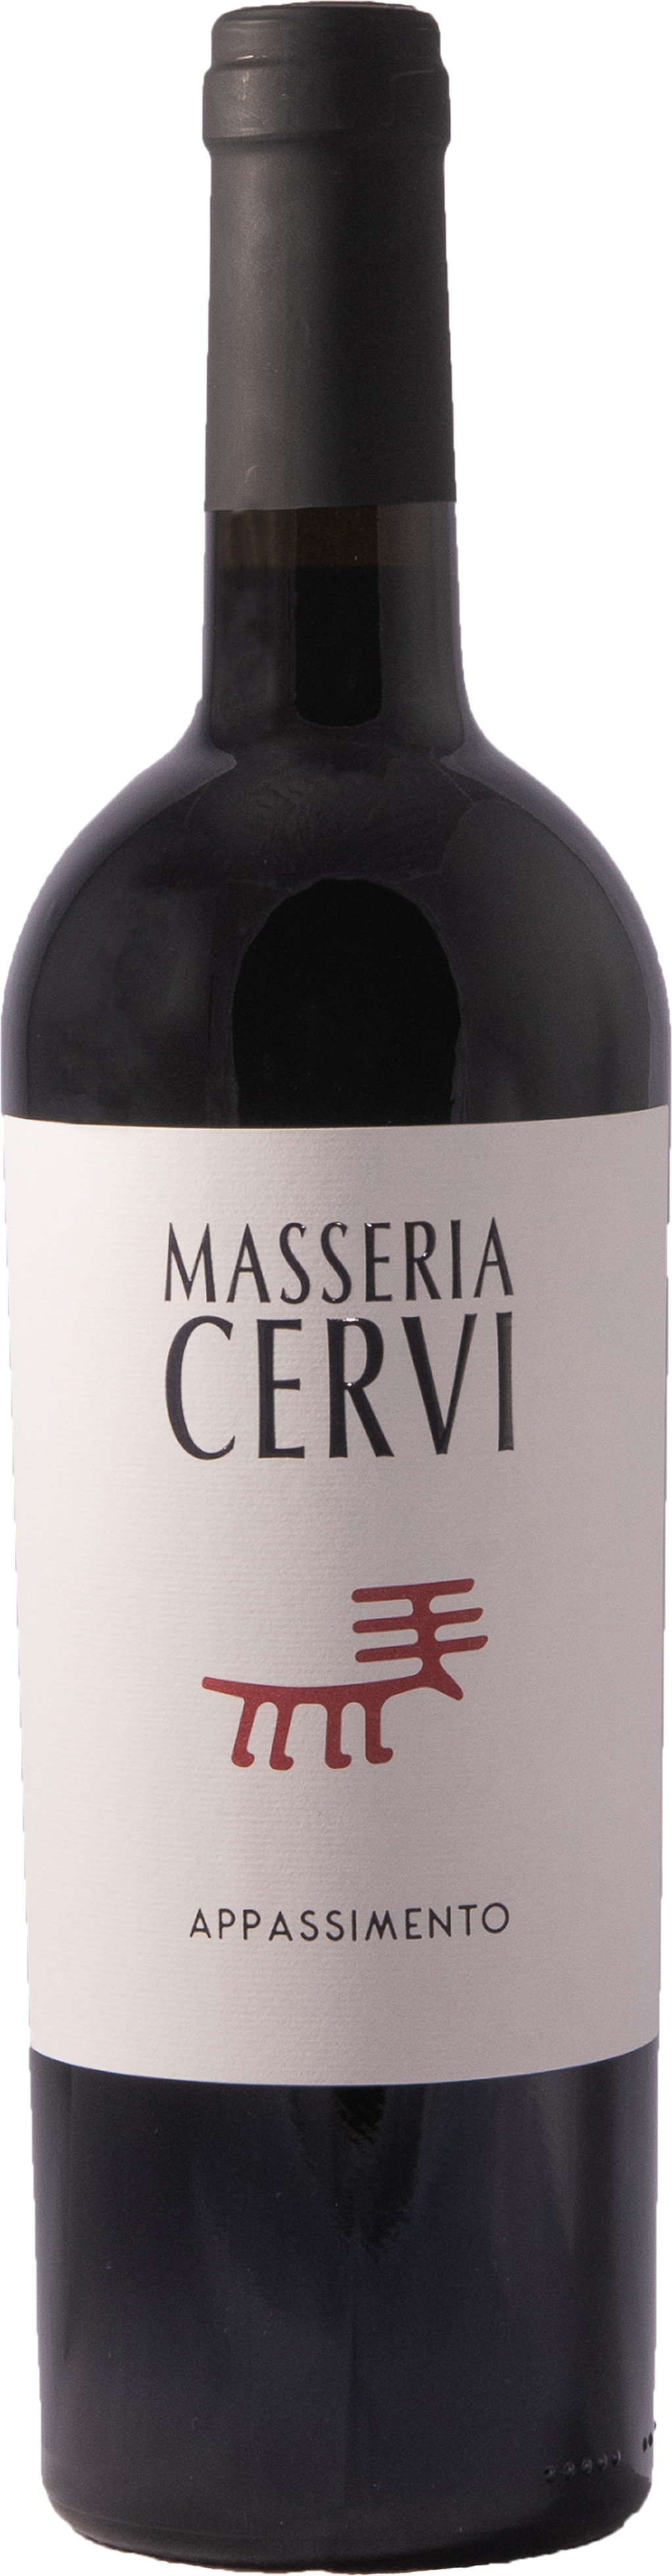 Masseria Cervi - Appassimento Puglia IGT - 2018